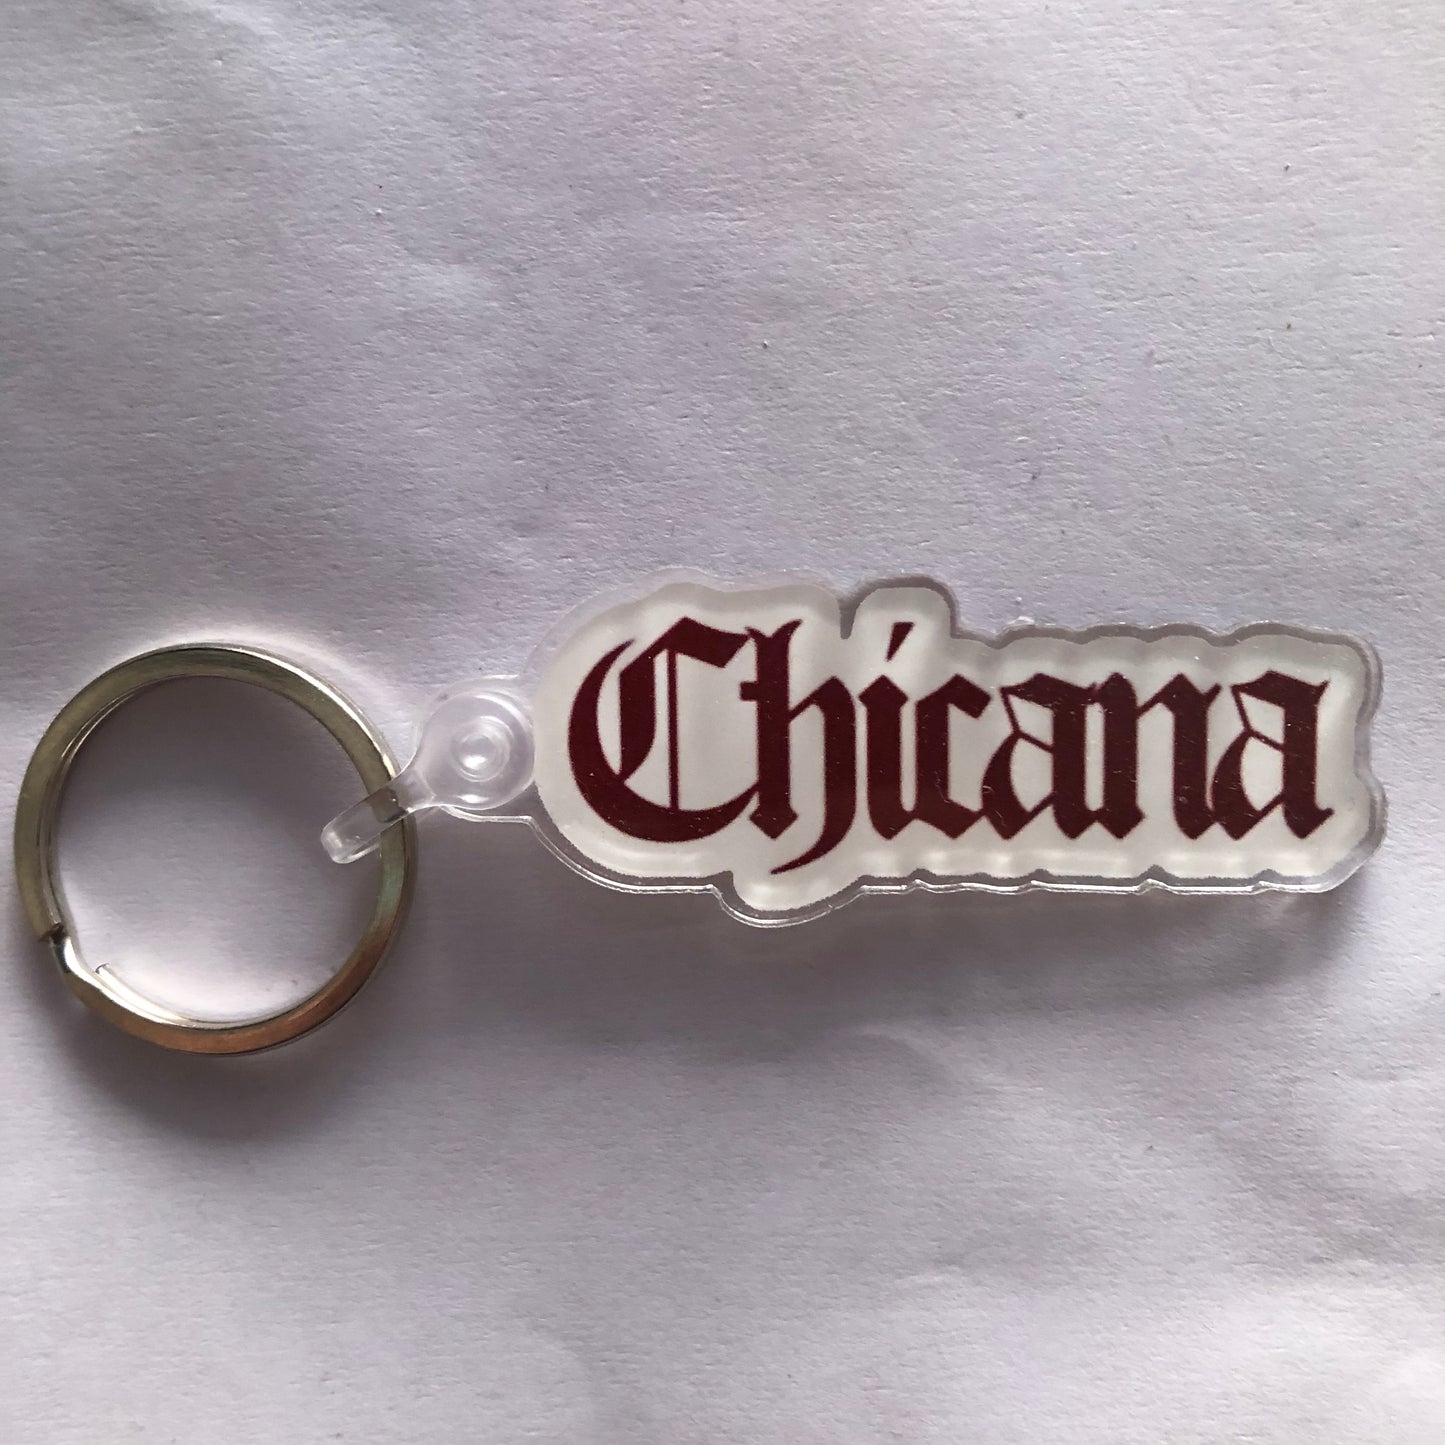 Chicana keychain